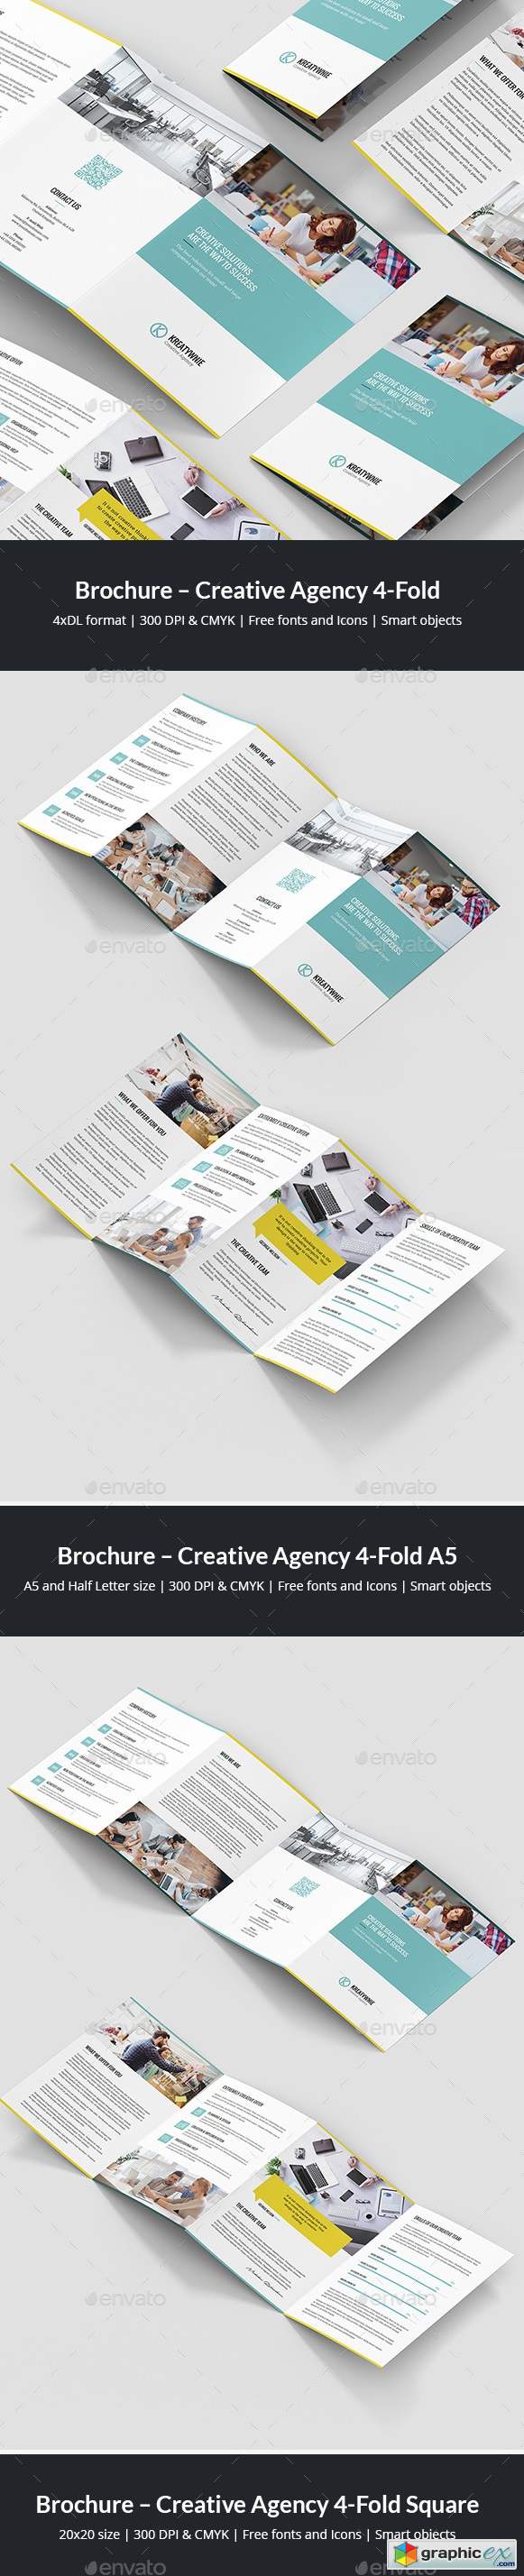 Creative Agency – Brochures Bundle Print Templates 10 in 1